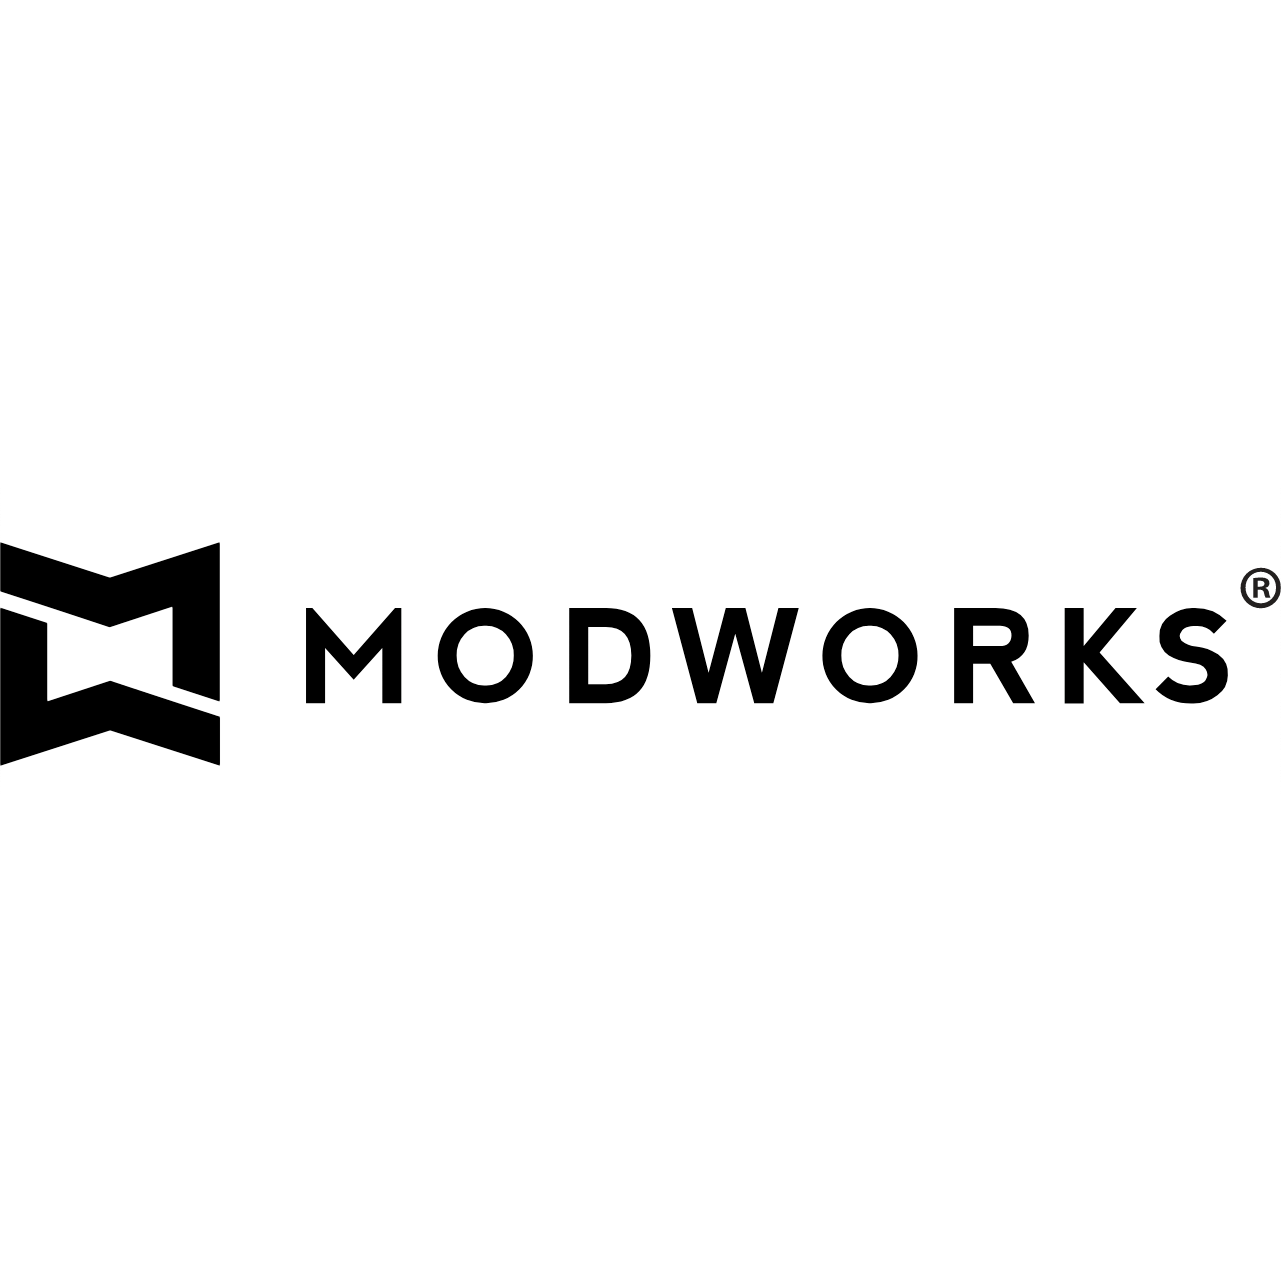 Modworks Coworking Logo